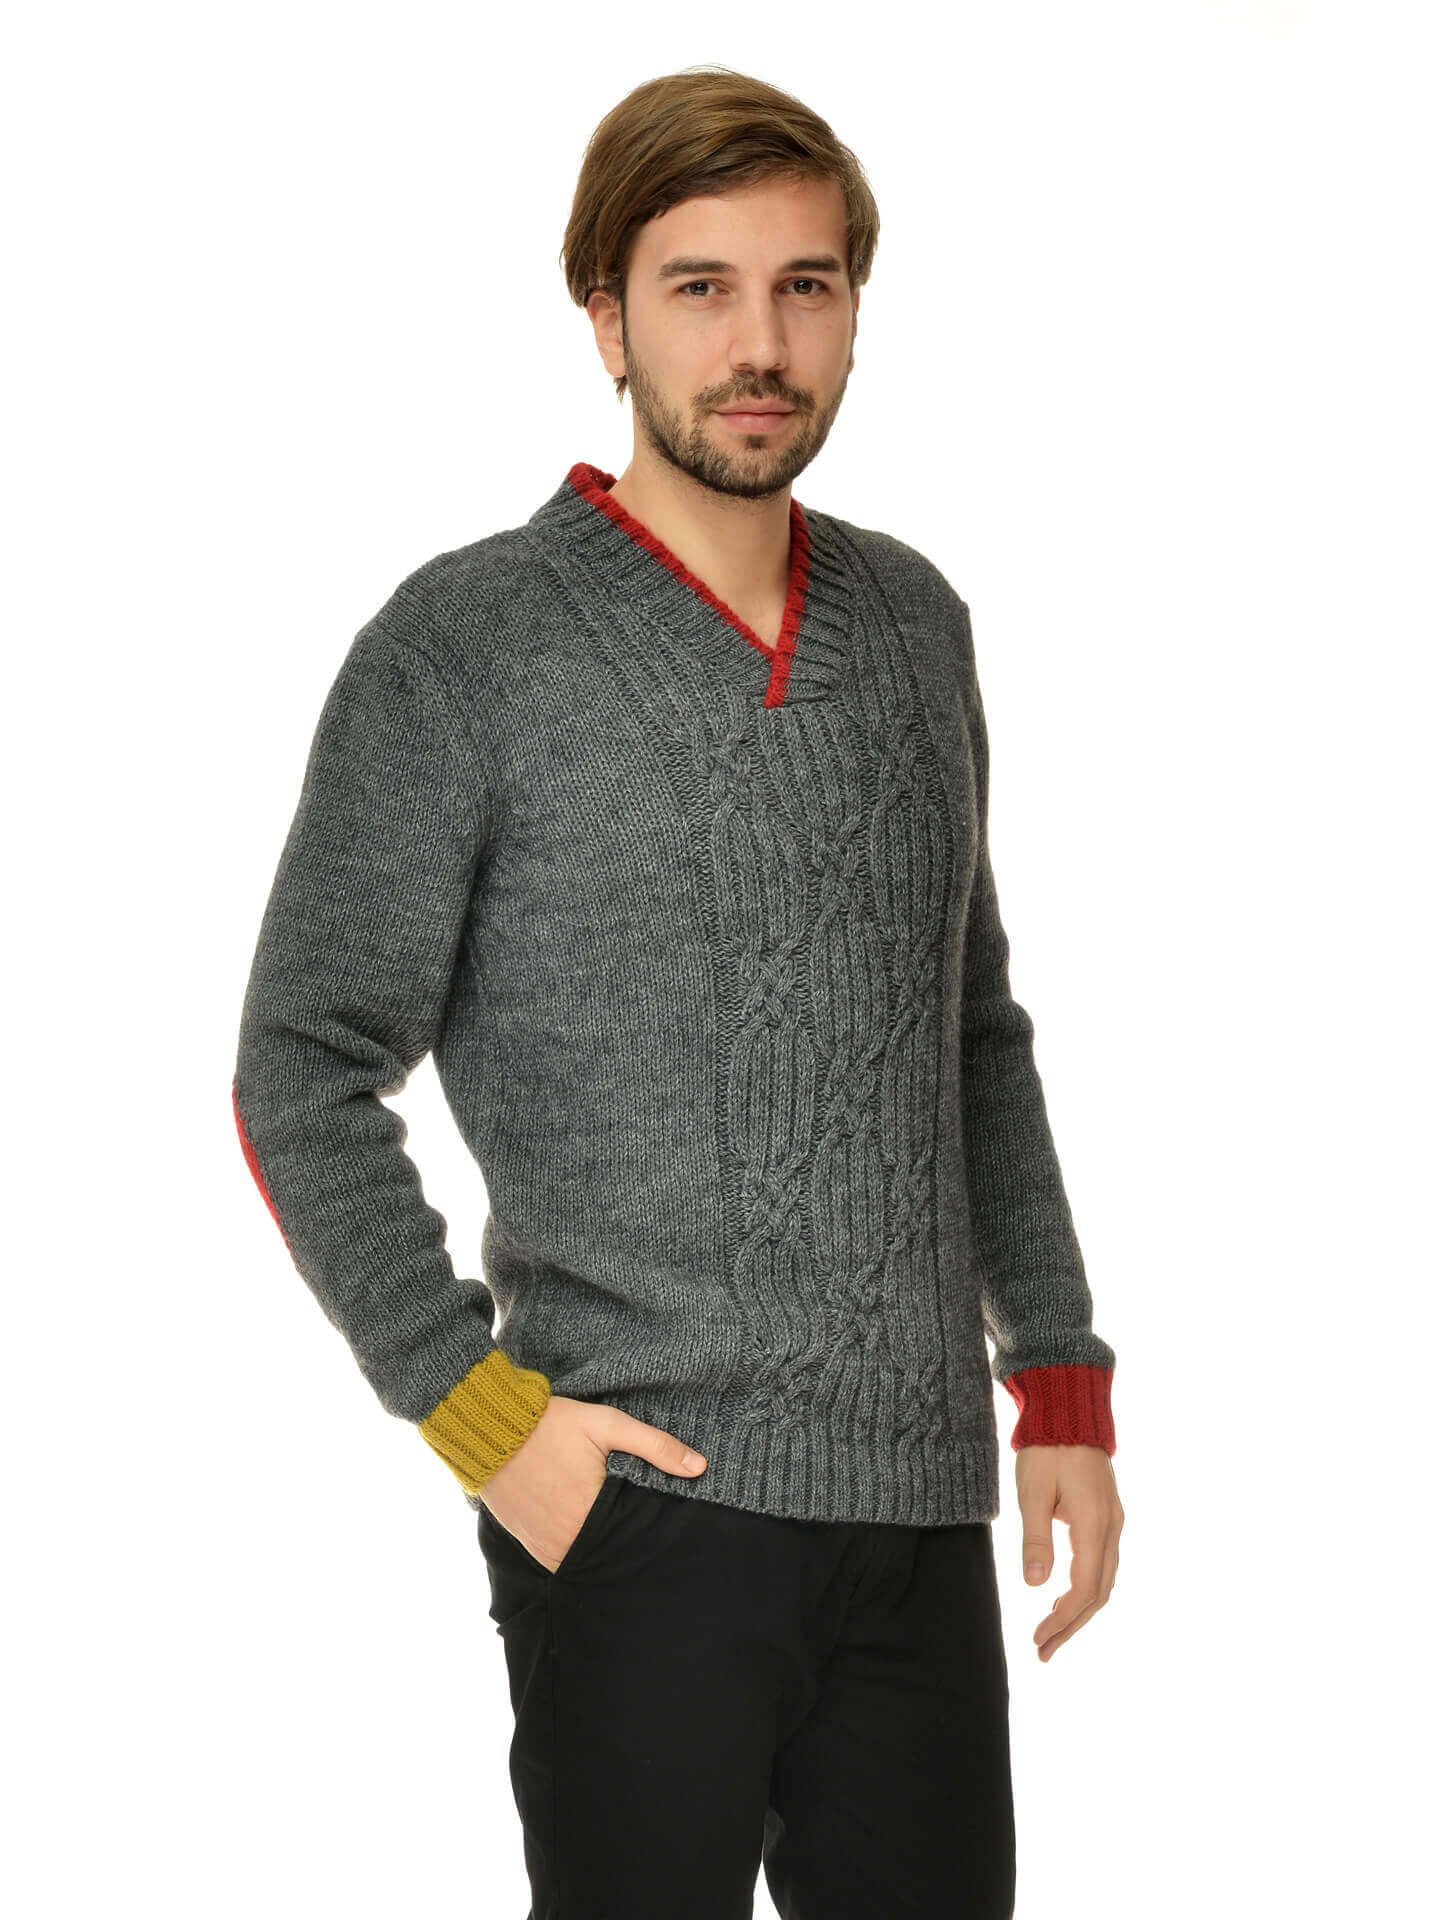 SB Knitwear - producator tricotaje 9